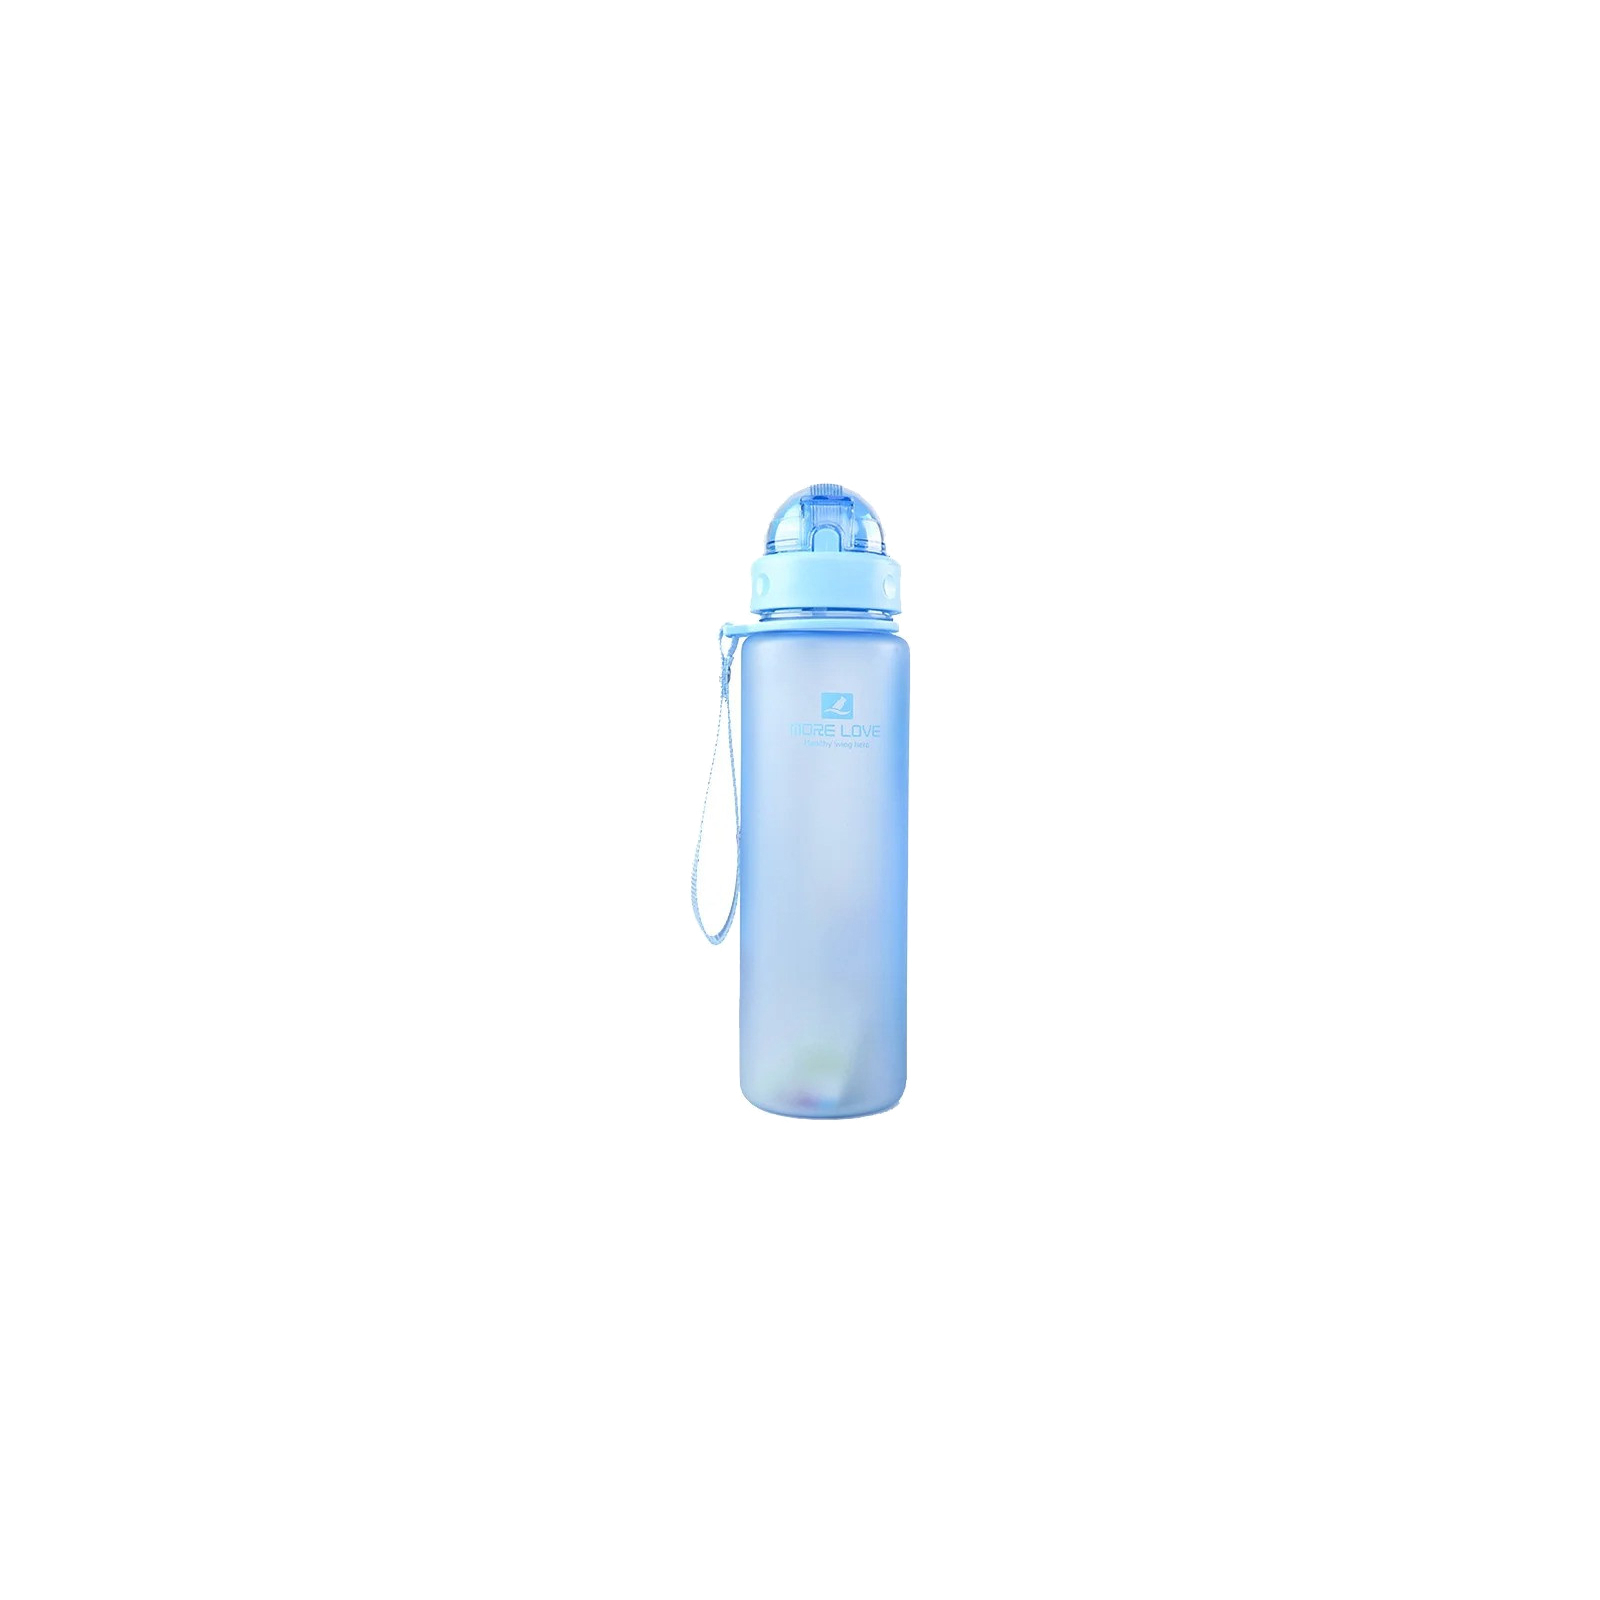 Бутылка для воды Casno 560 мл MX-5029 Фіолетова (MX-5029_Purple)